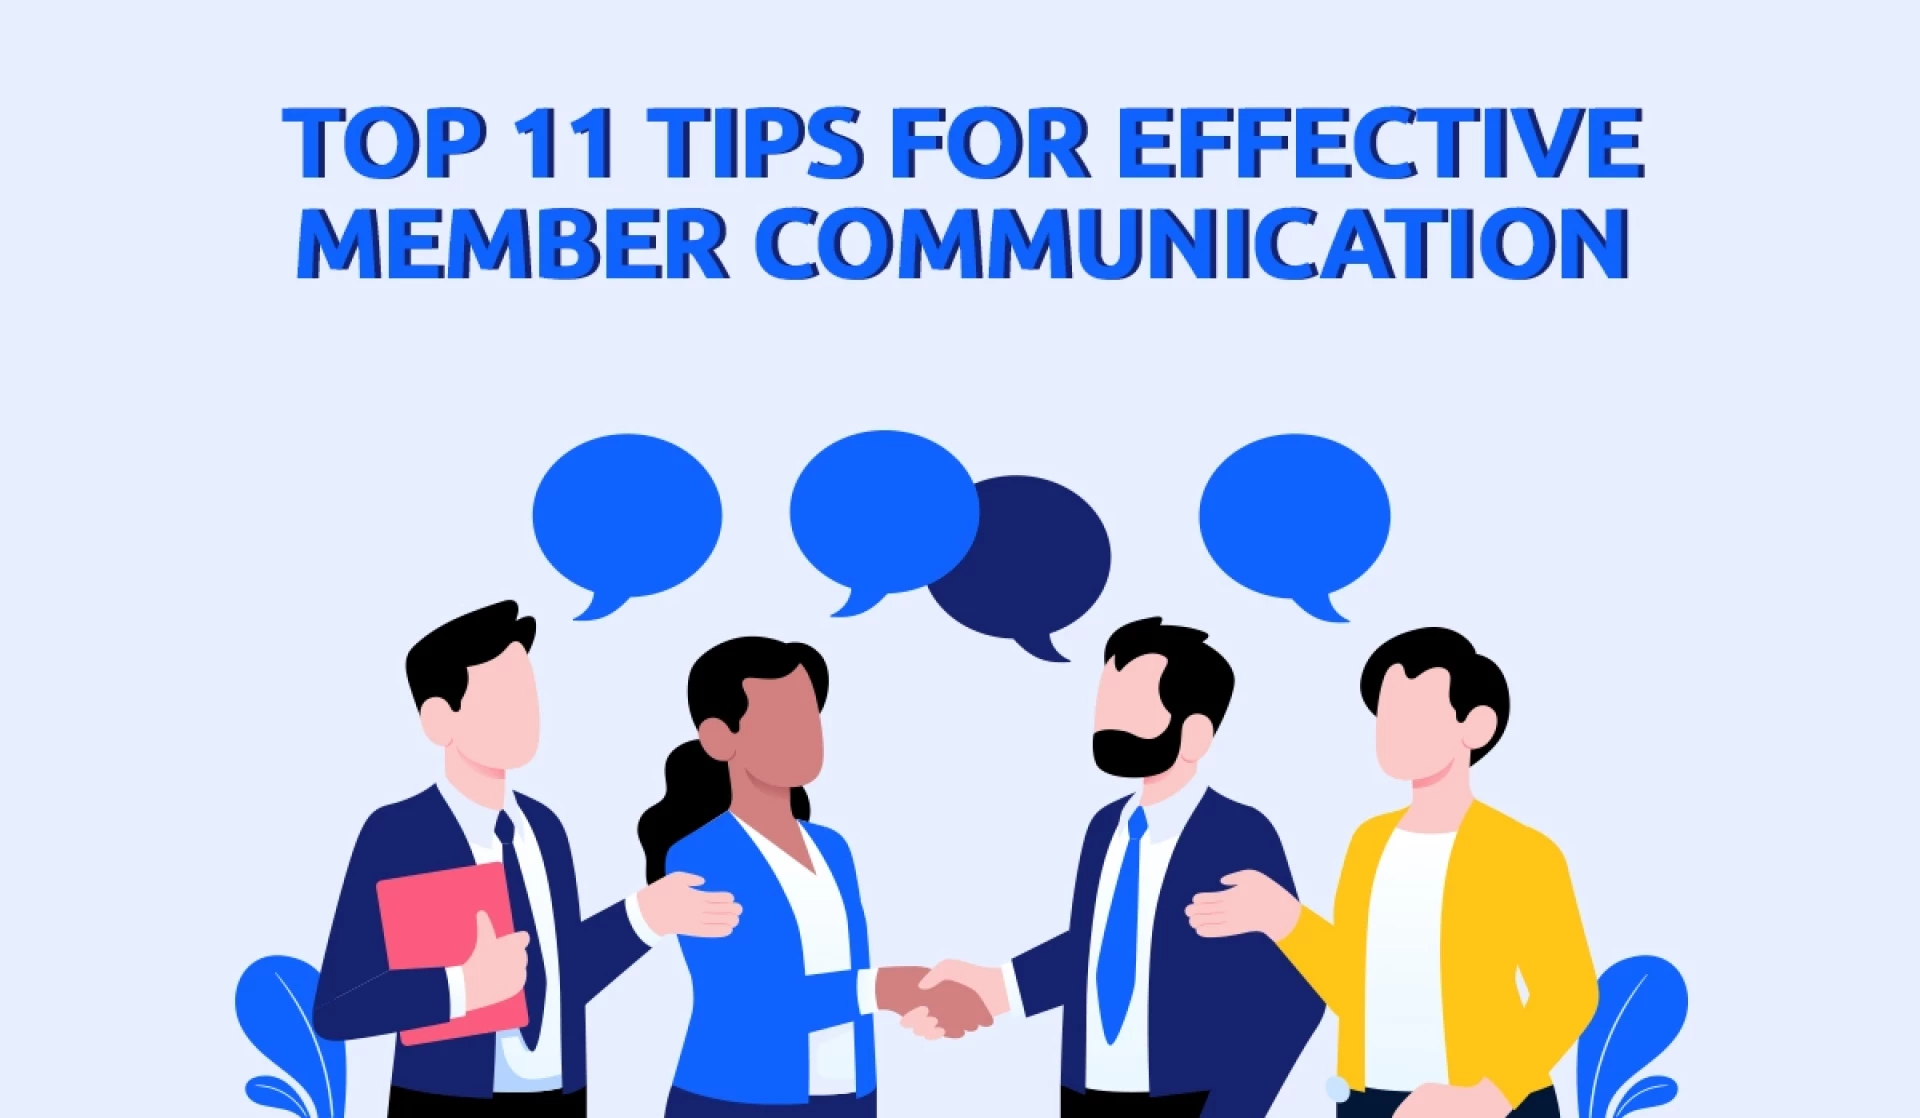 Top 11 Tips for Effective Member Communication